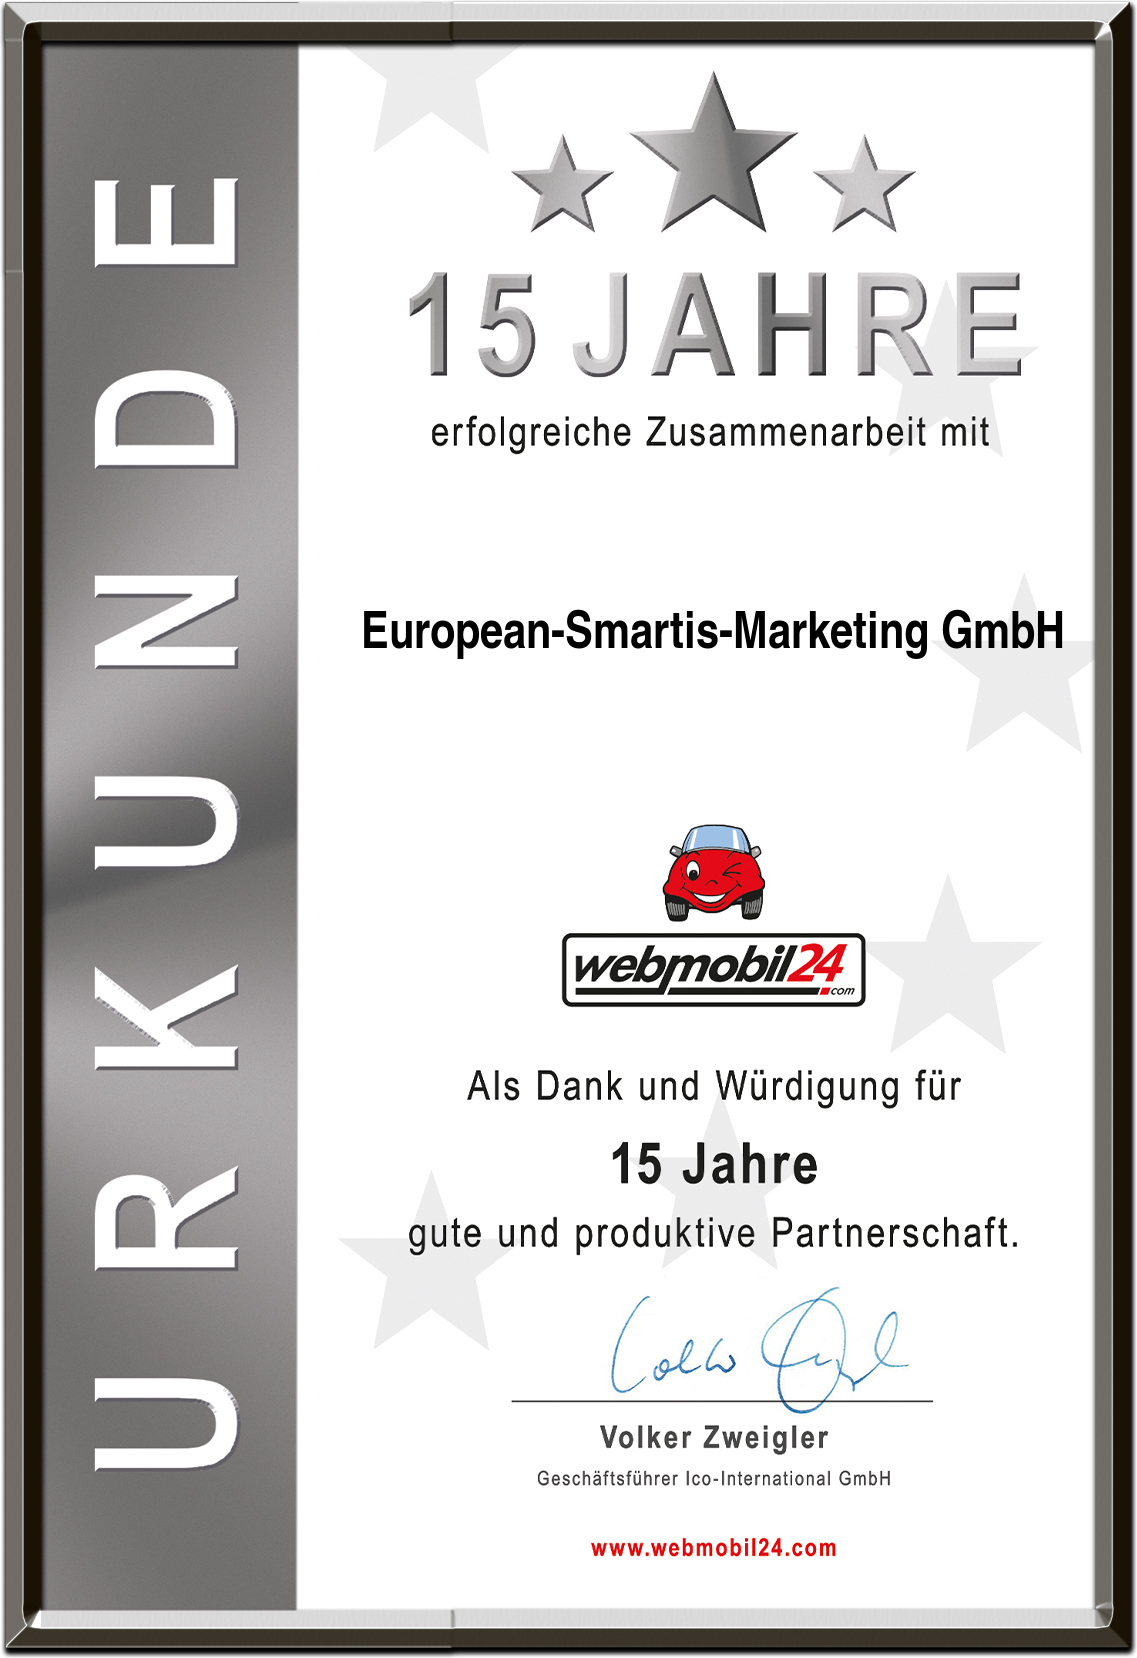 European-Smartis-Marketing GmbH